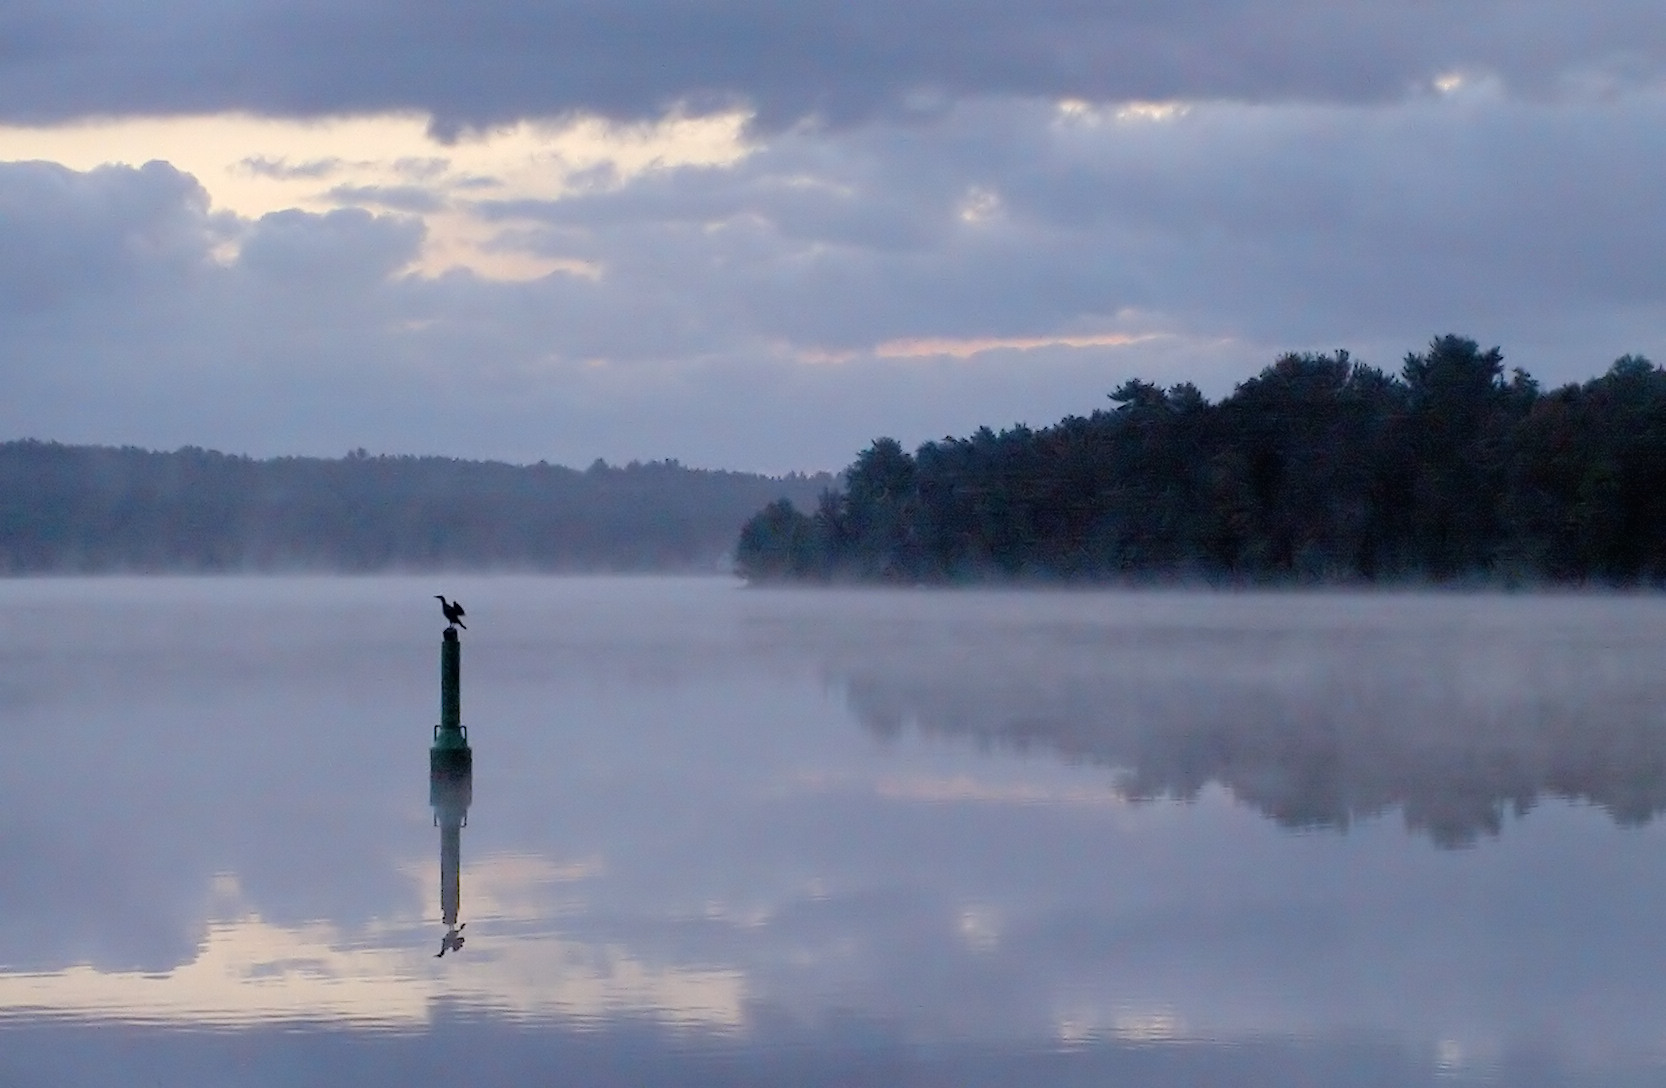 Morning Calm, LaHave River (photograph copyright 2010 Arthur D. Marshall)